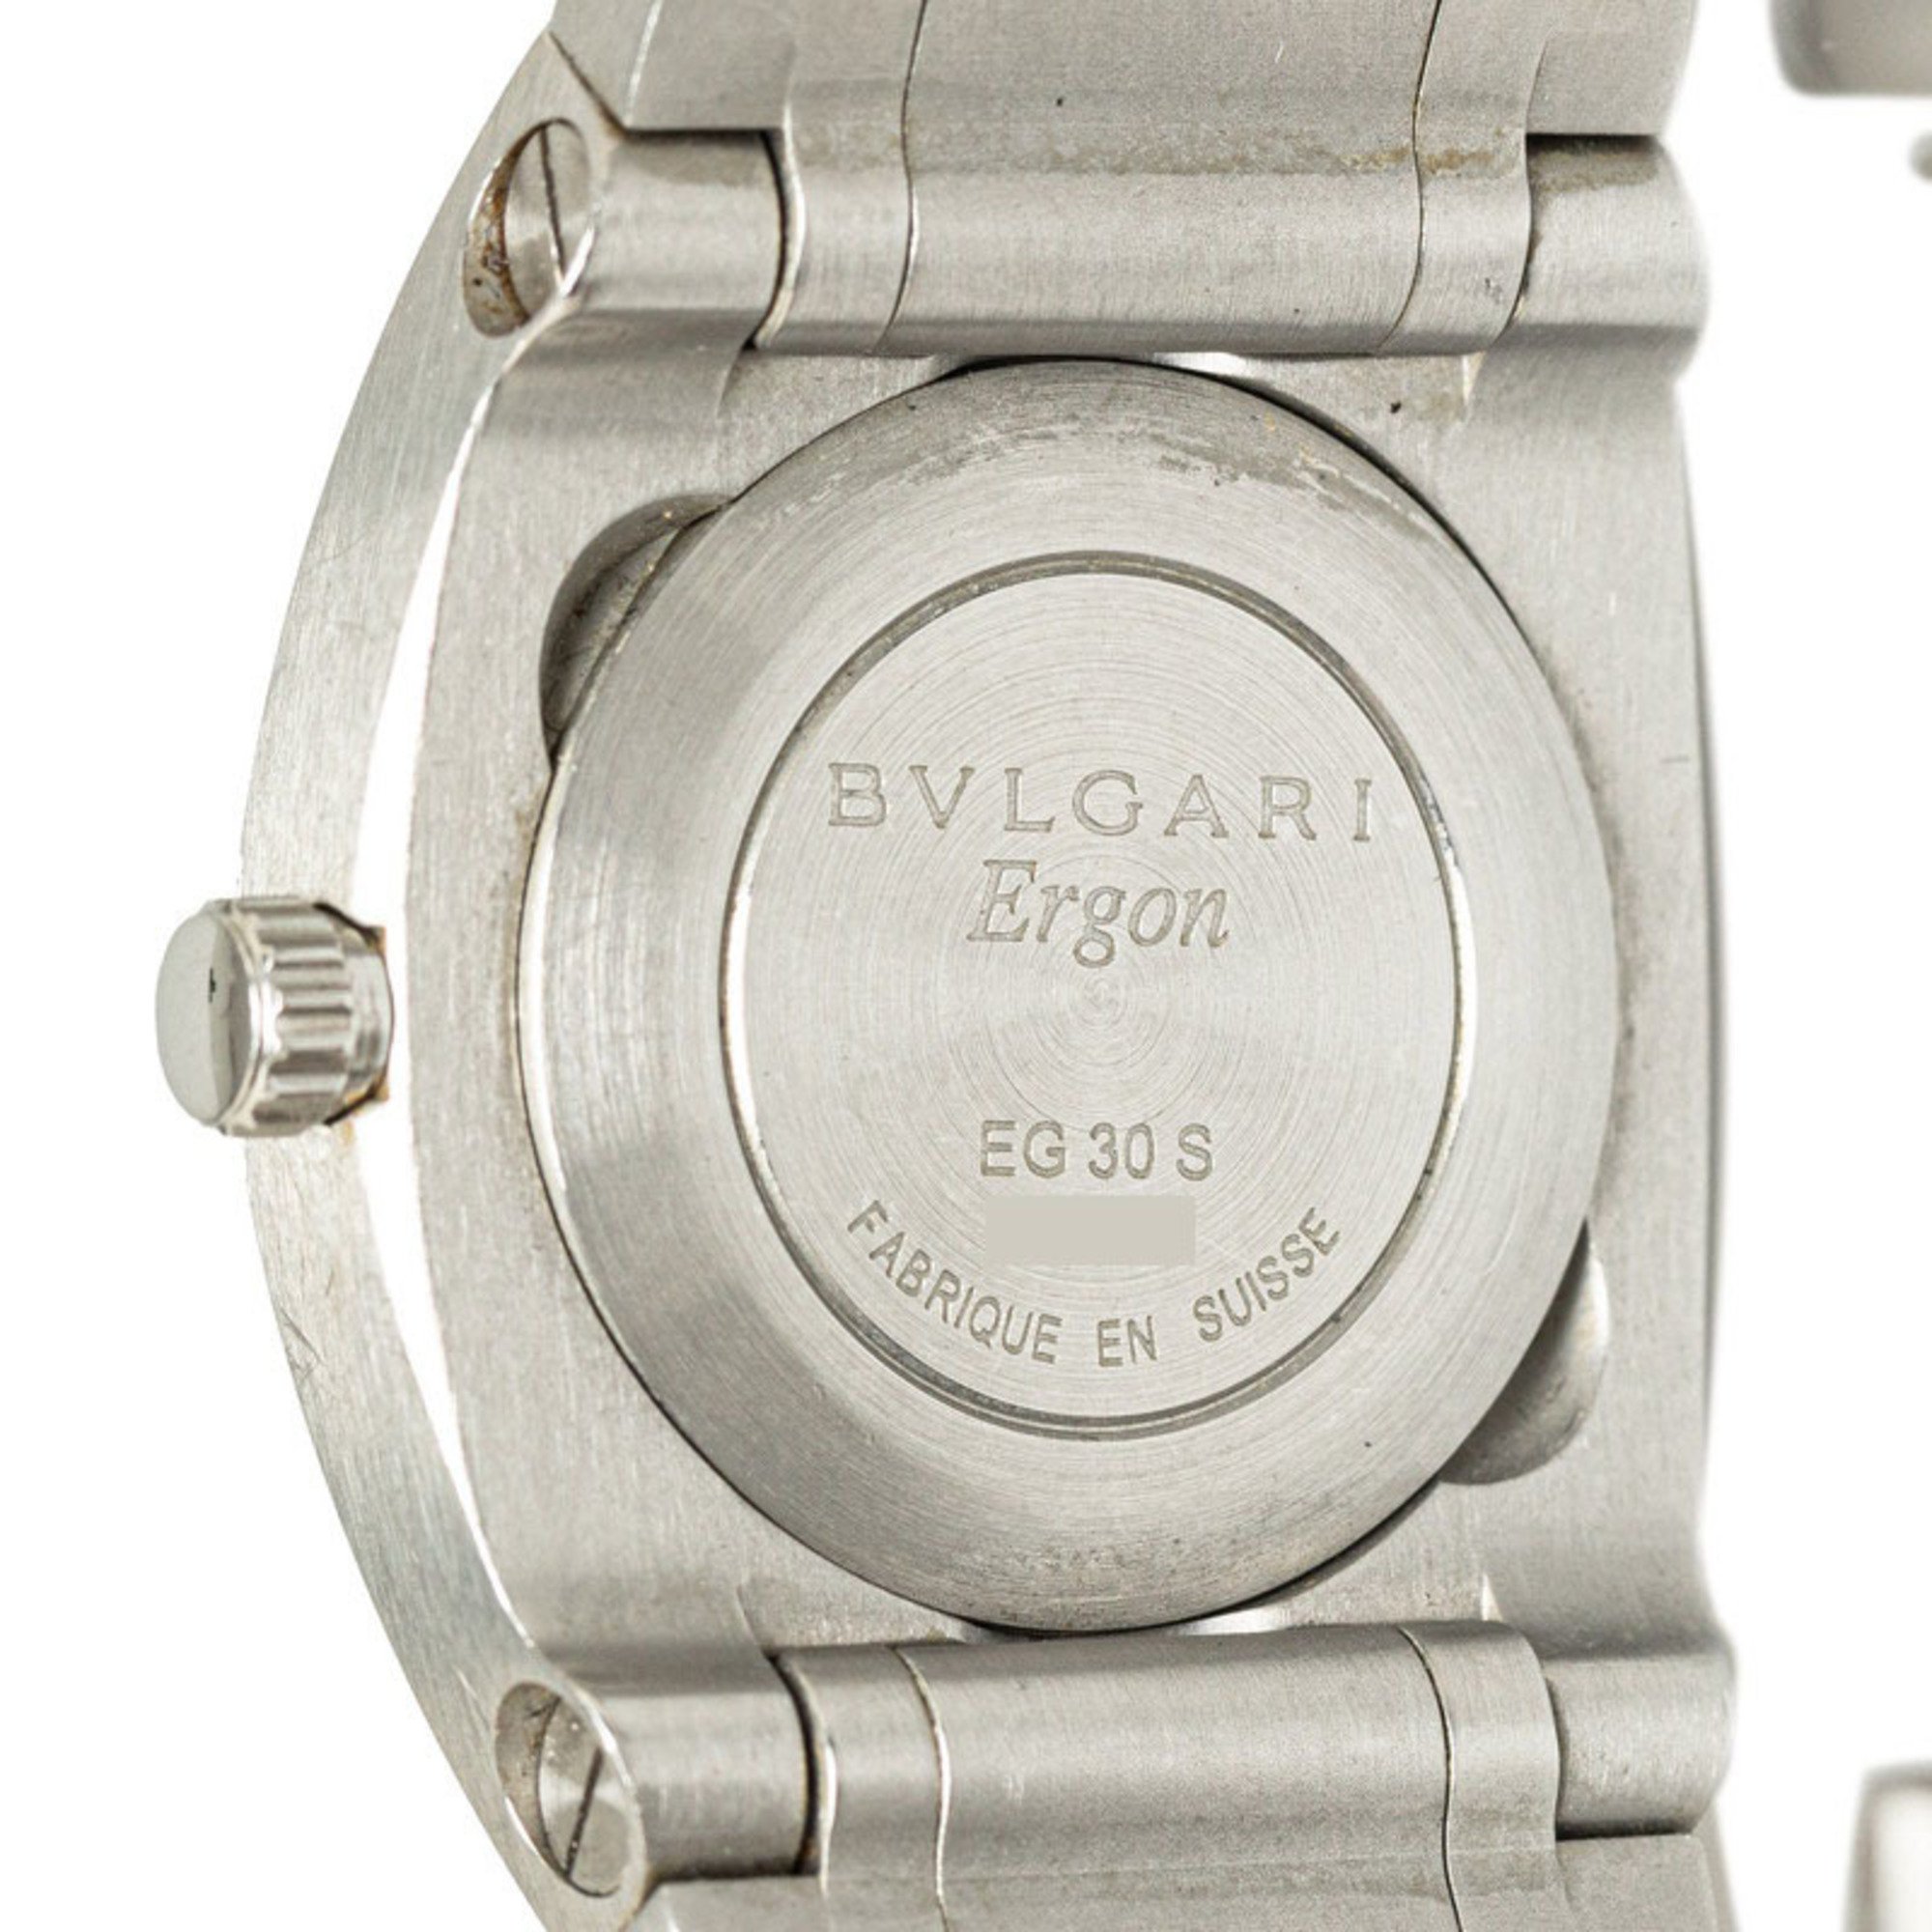 BVLGARI Ergon Watch EG30S Quartz Black Dial Stainless Steel Women's